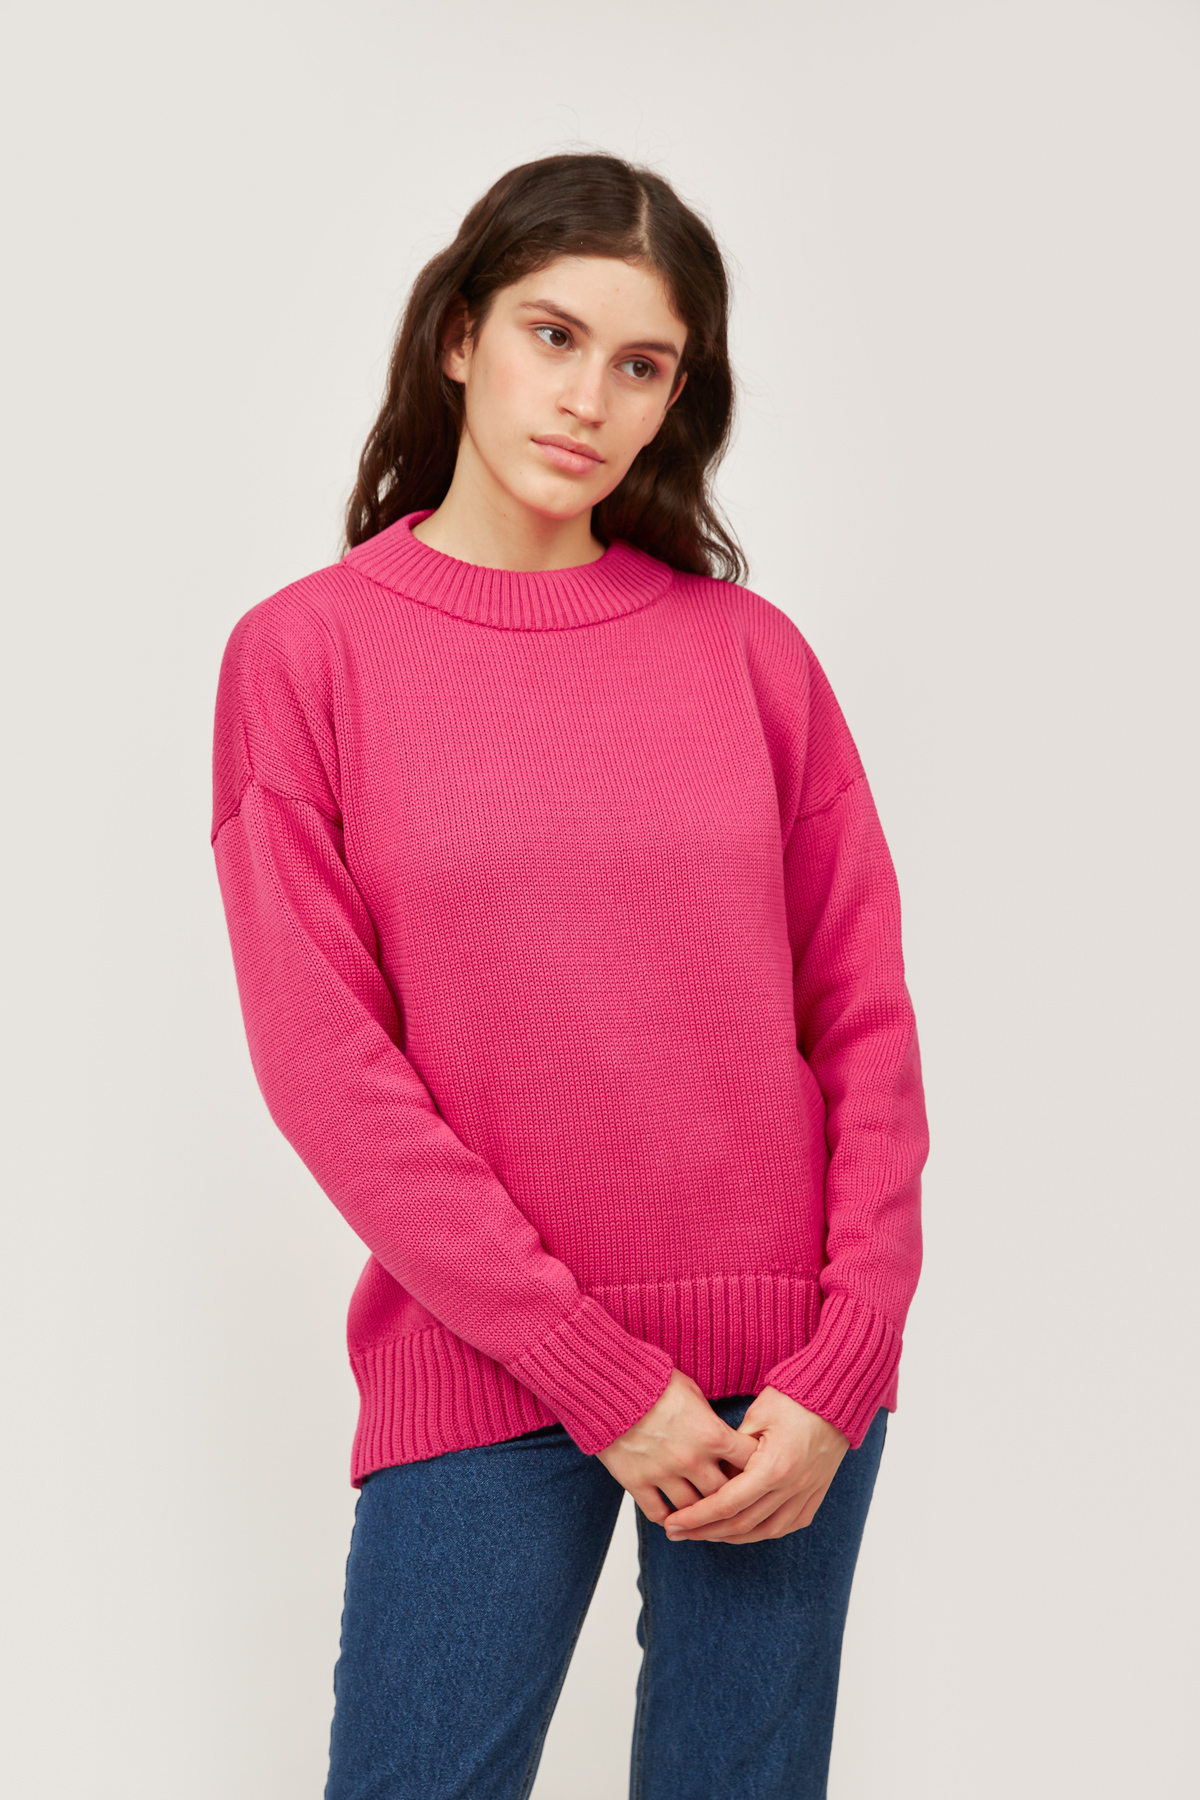 Хлопковый свитер цвета фуксии, фото 1